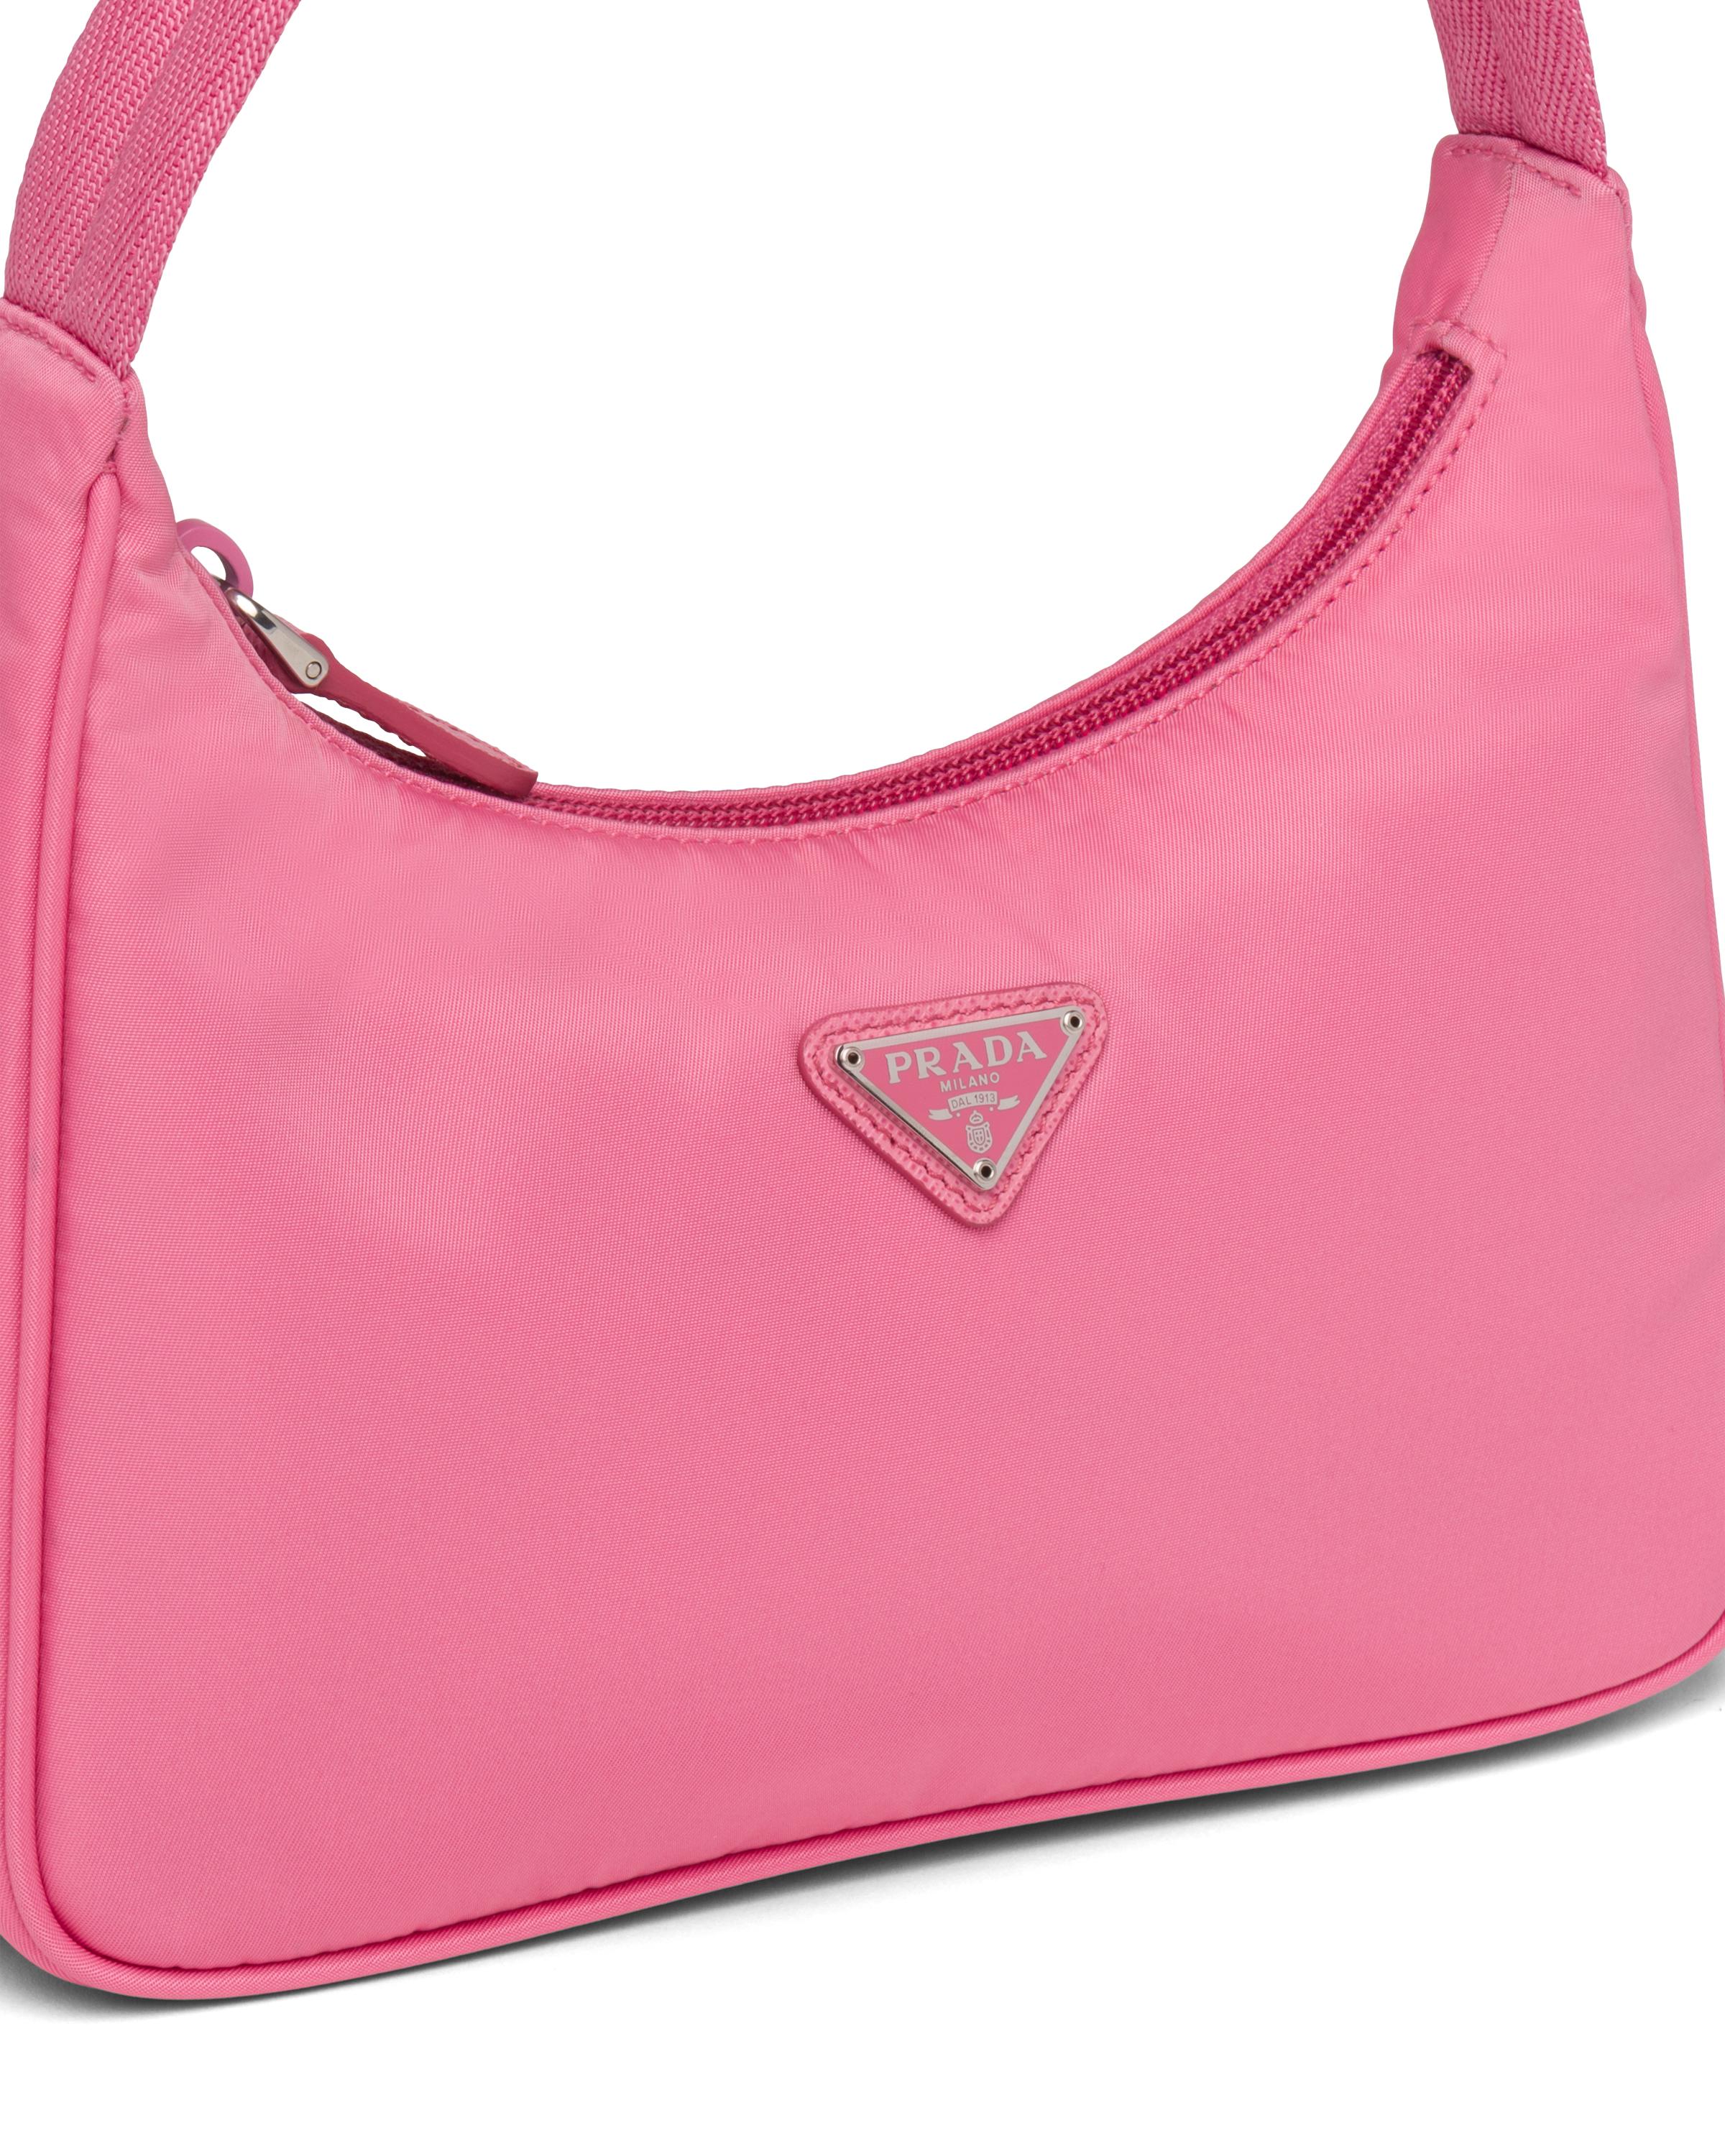 Prada Synthetic Re-edition 2000 Nylon Mini Bag in Pink - Lyst